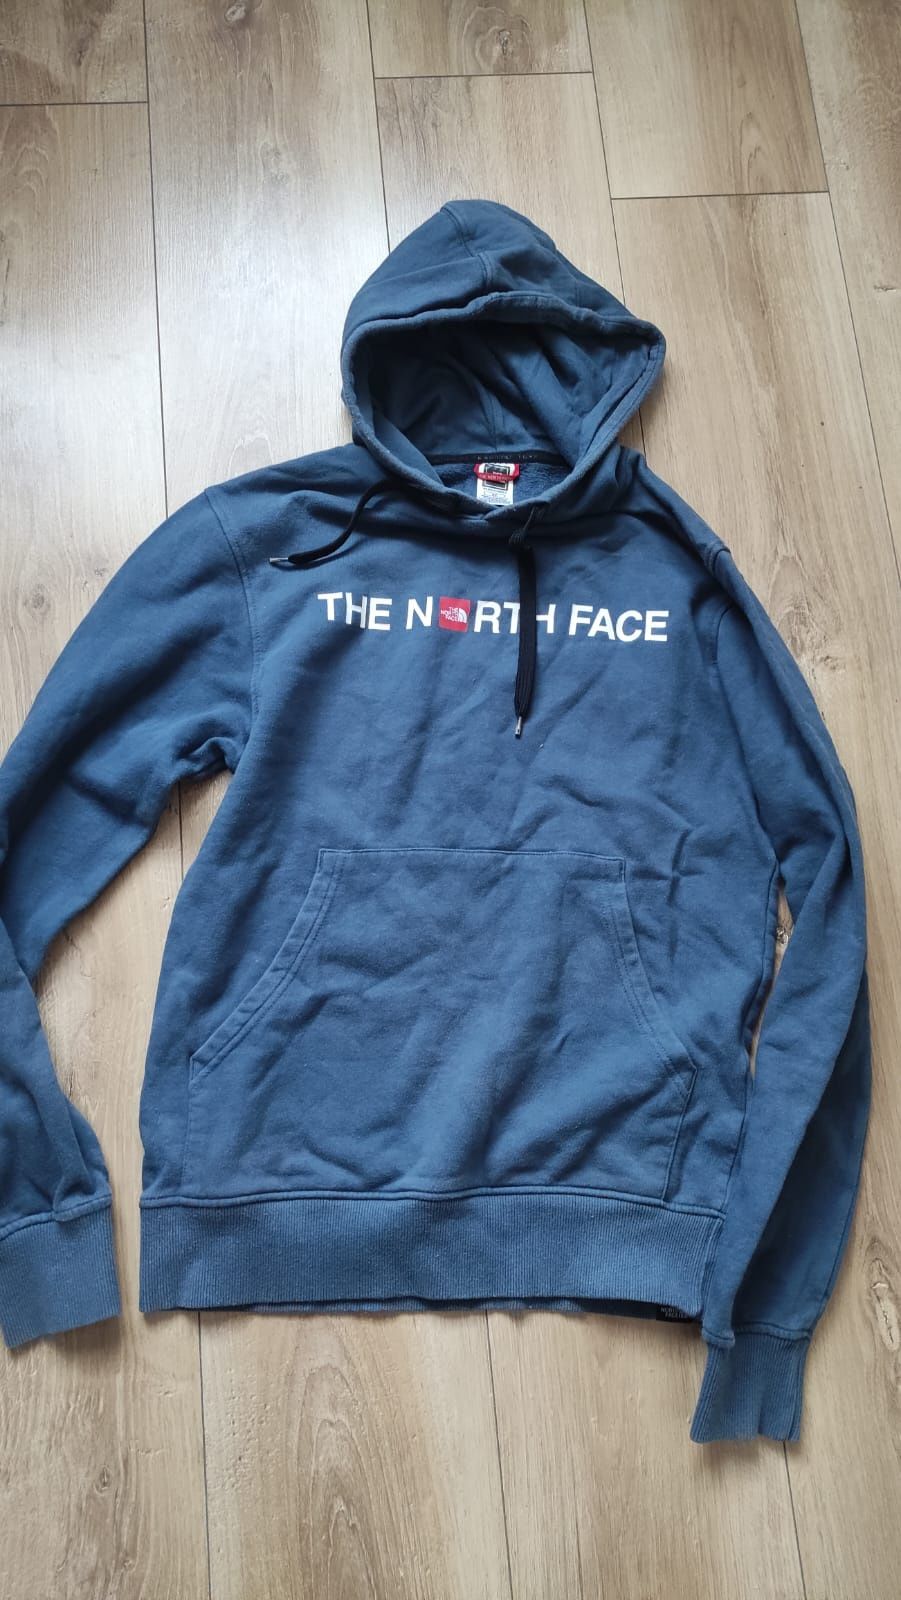 Bluza z kapturem The North Face rozmiar S